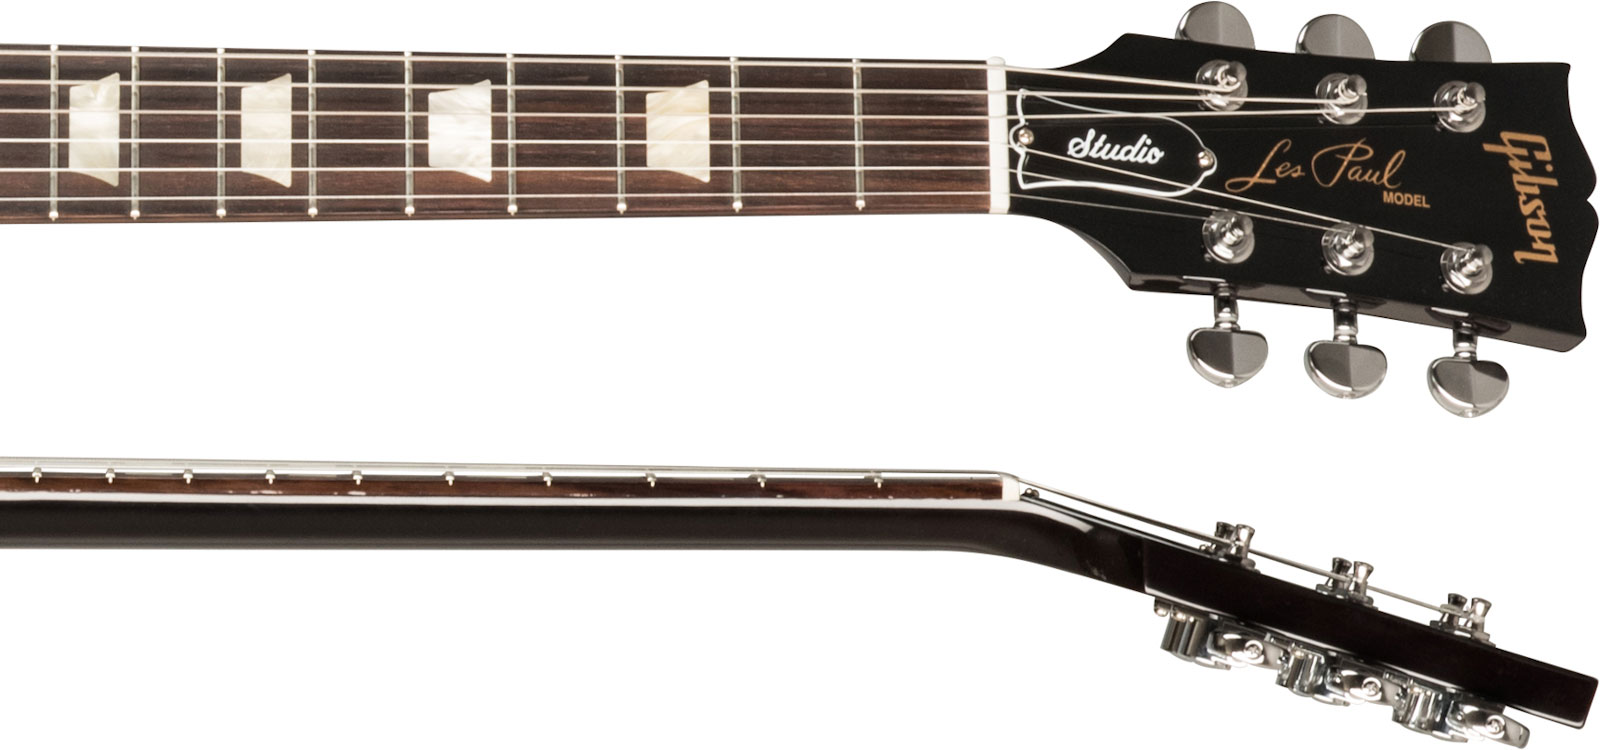 Gibson Les Paul Studio Modern 2h Ht Rw - Smokehouse Burst - Single cut electric guitar - Variation 3